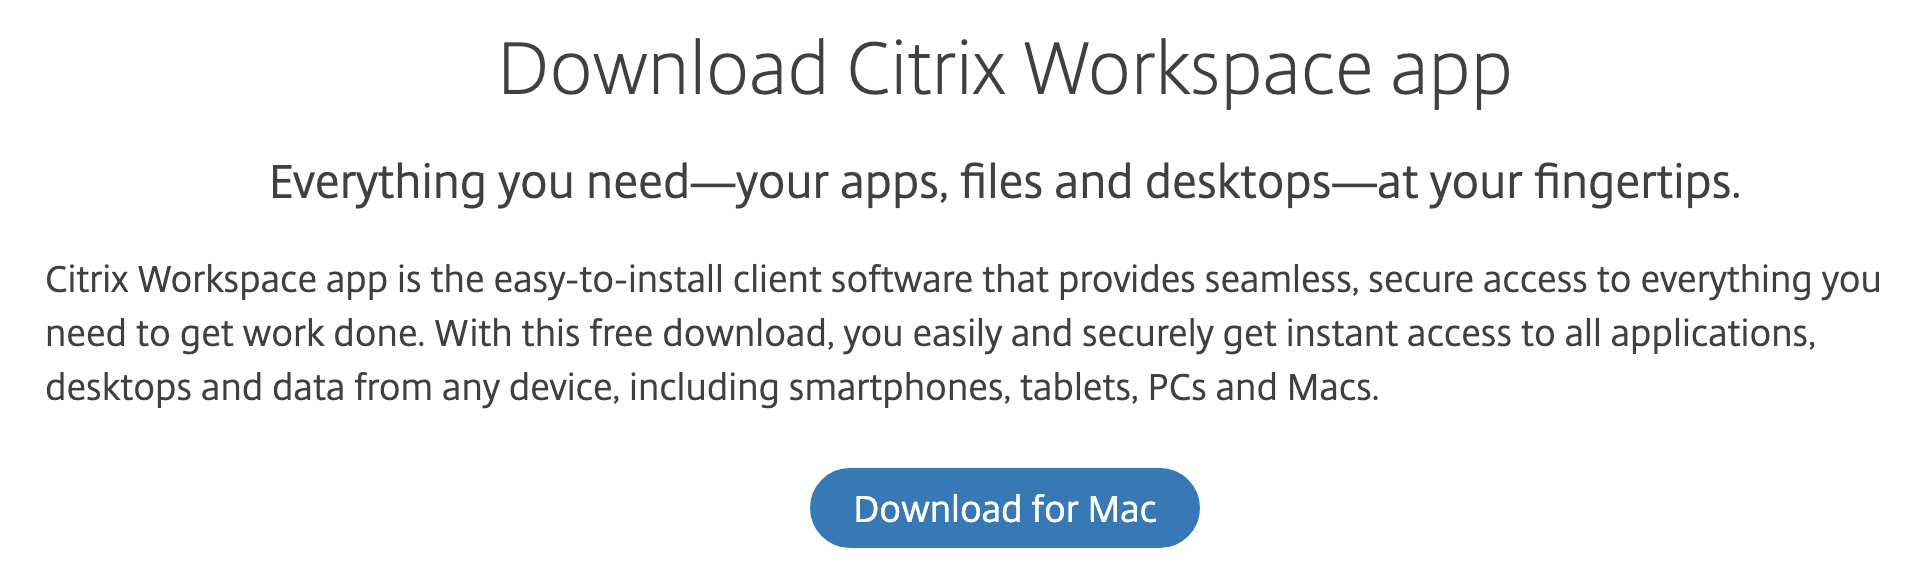 Download citrix workspace